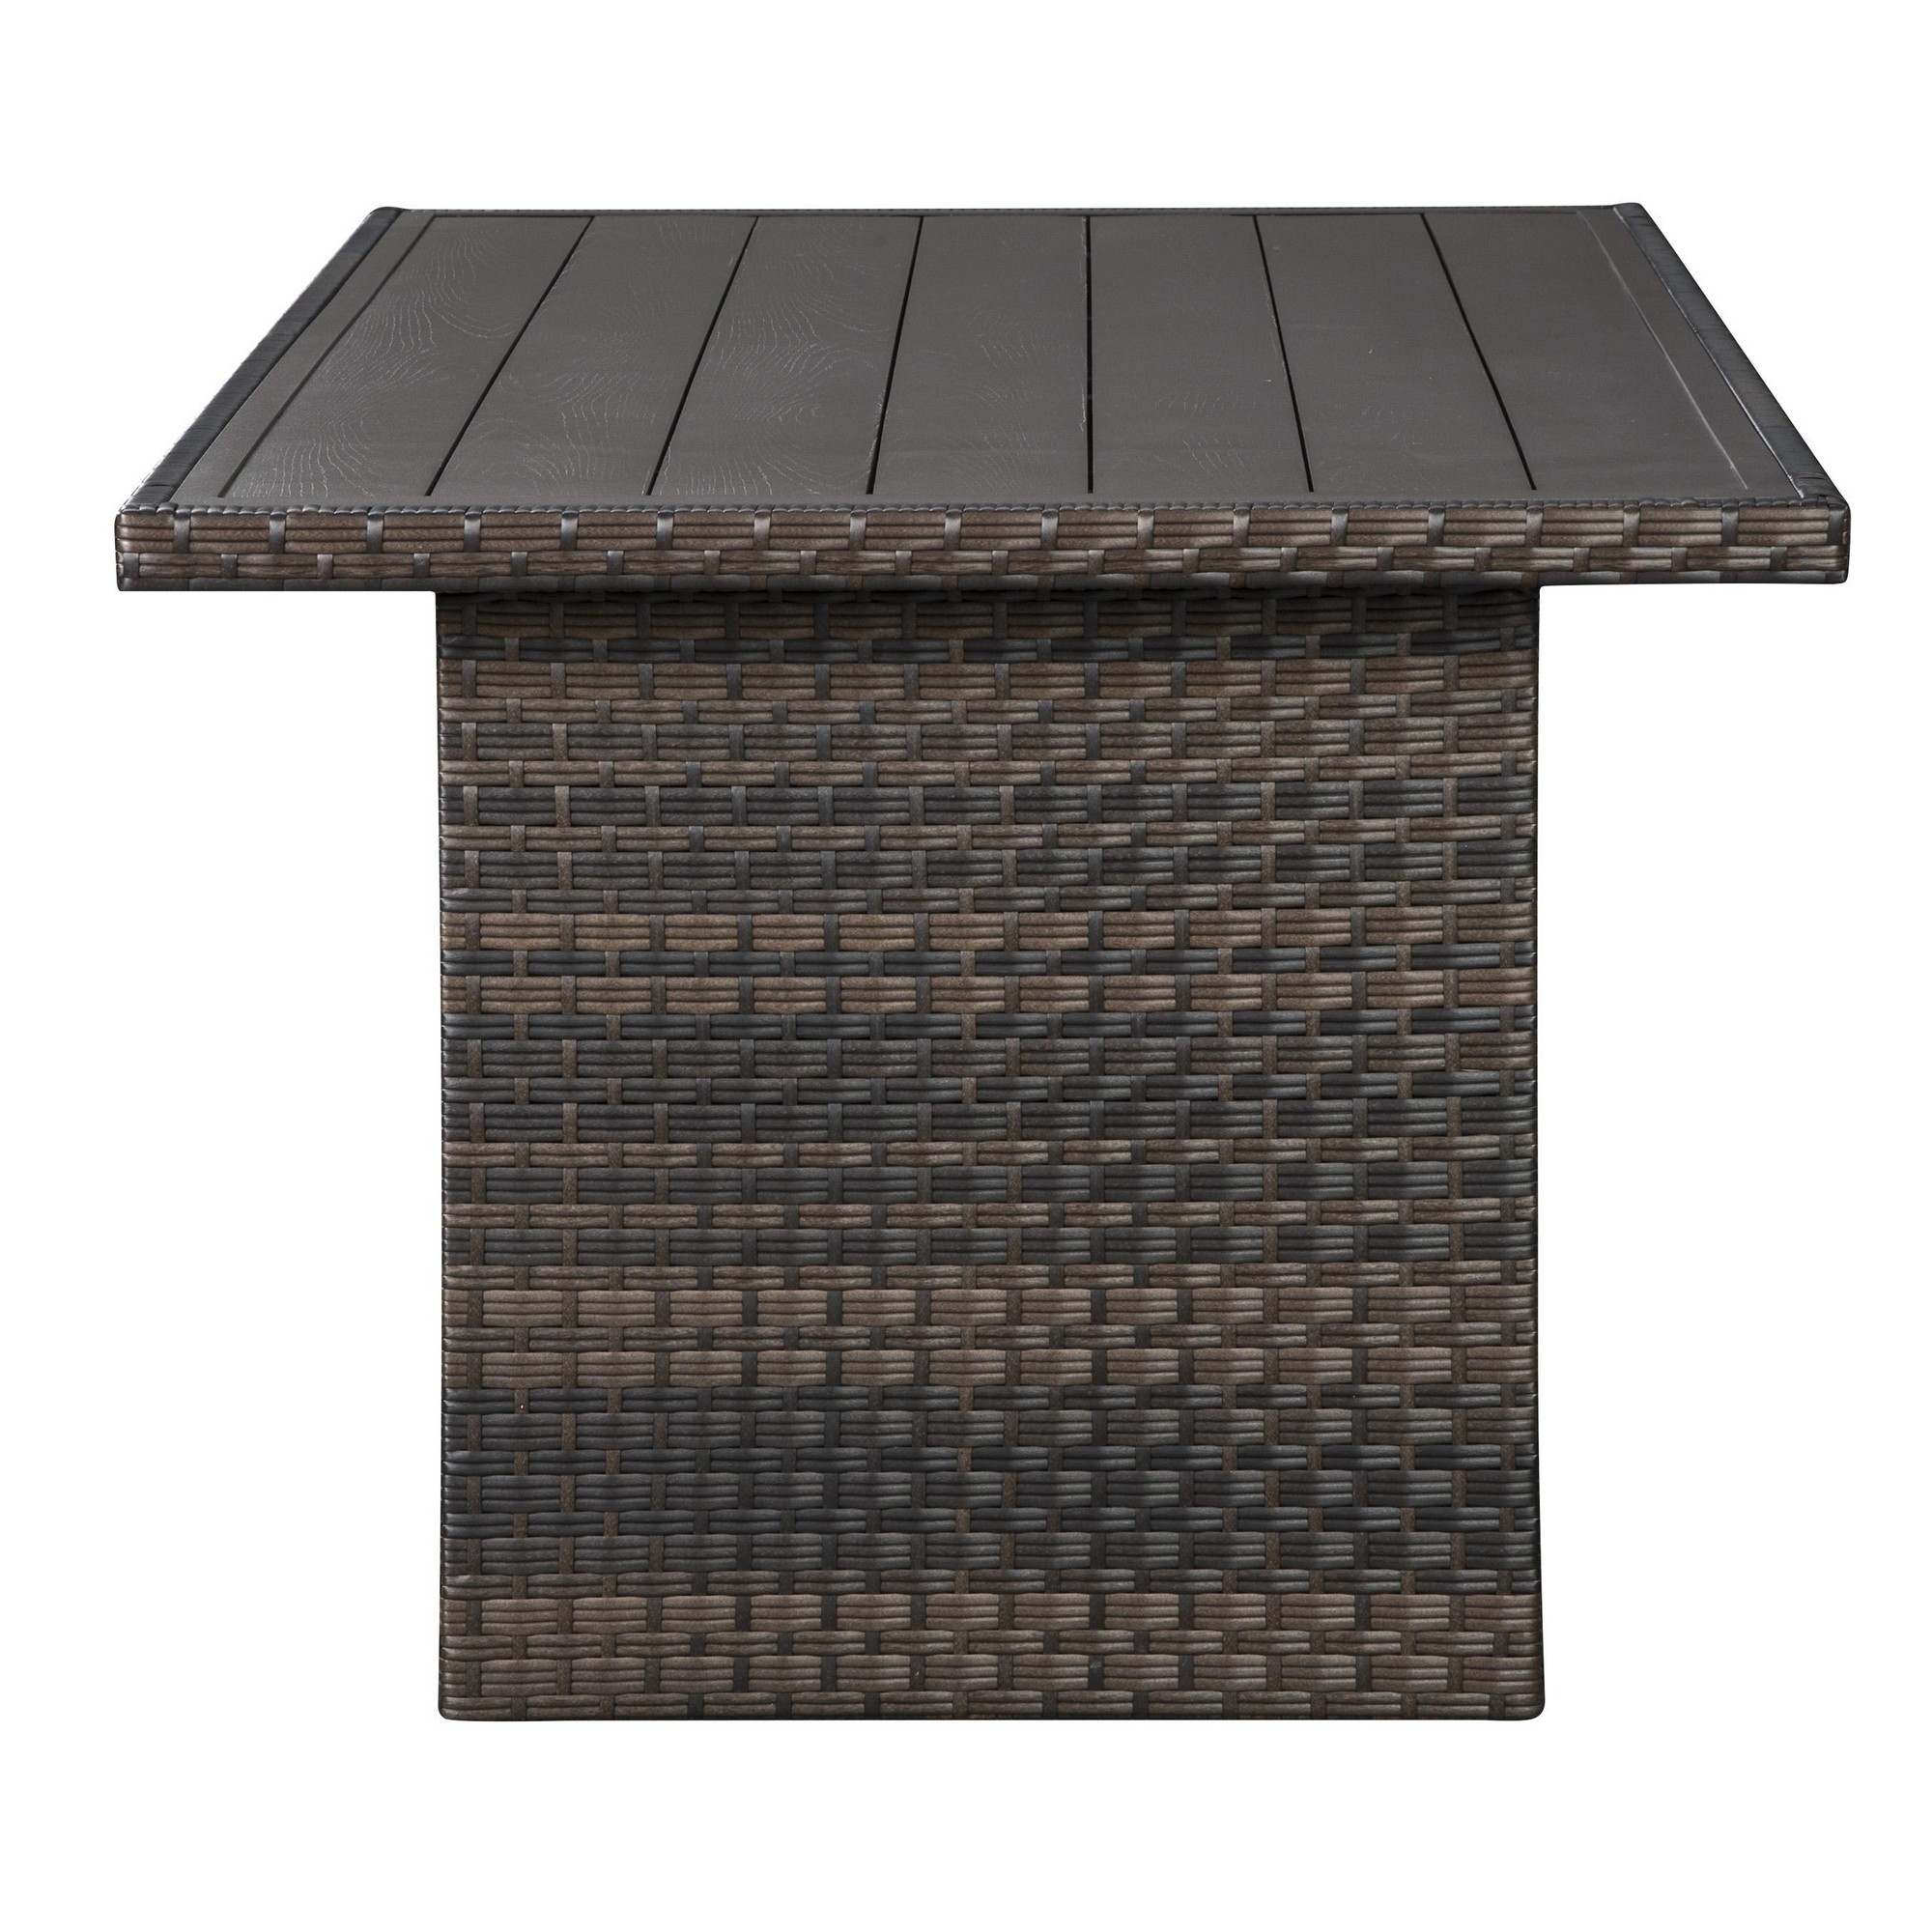 Rectangular Wicker Woven Aluminum Frame Table With Open Shelf, Dark Brown- Saltoro Sherpi